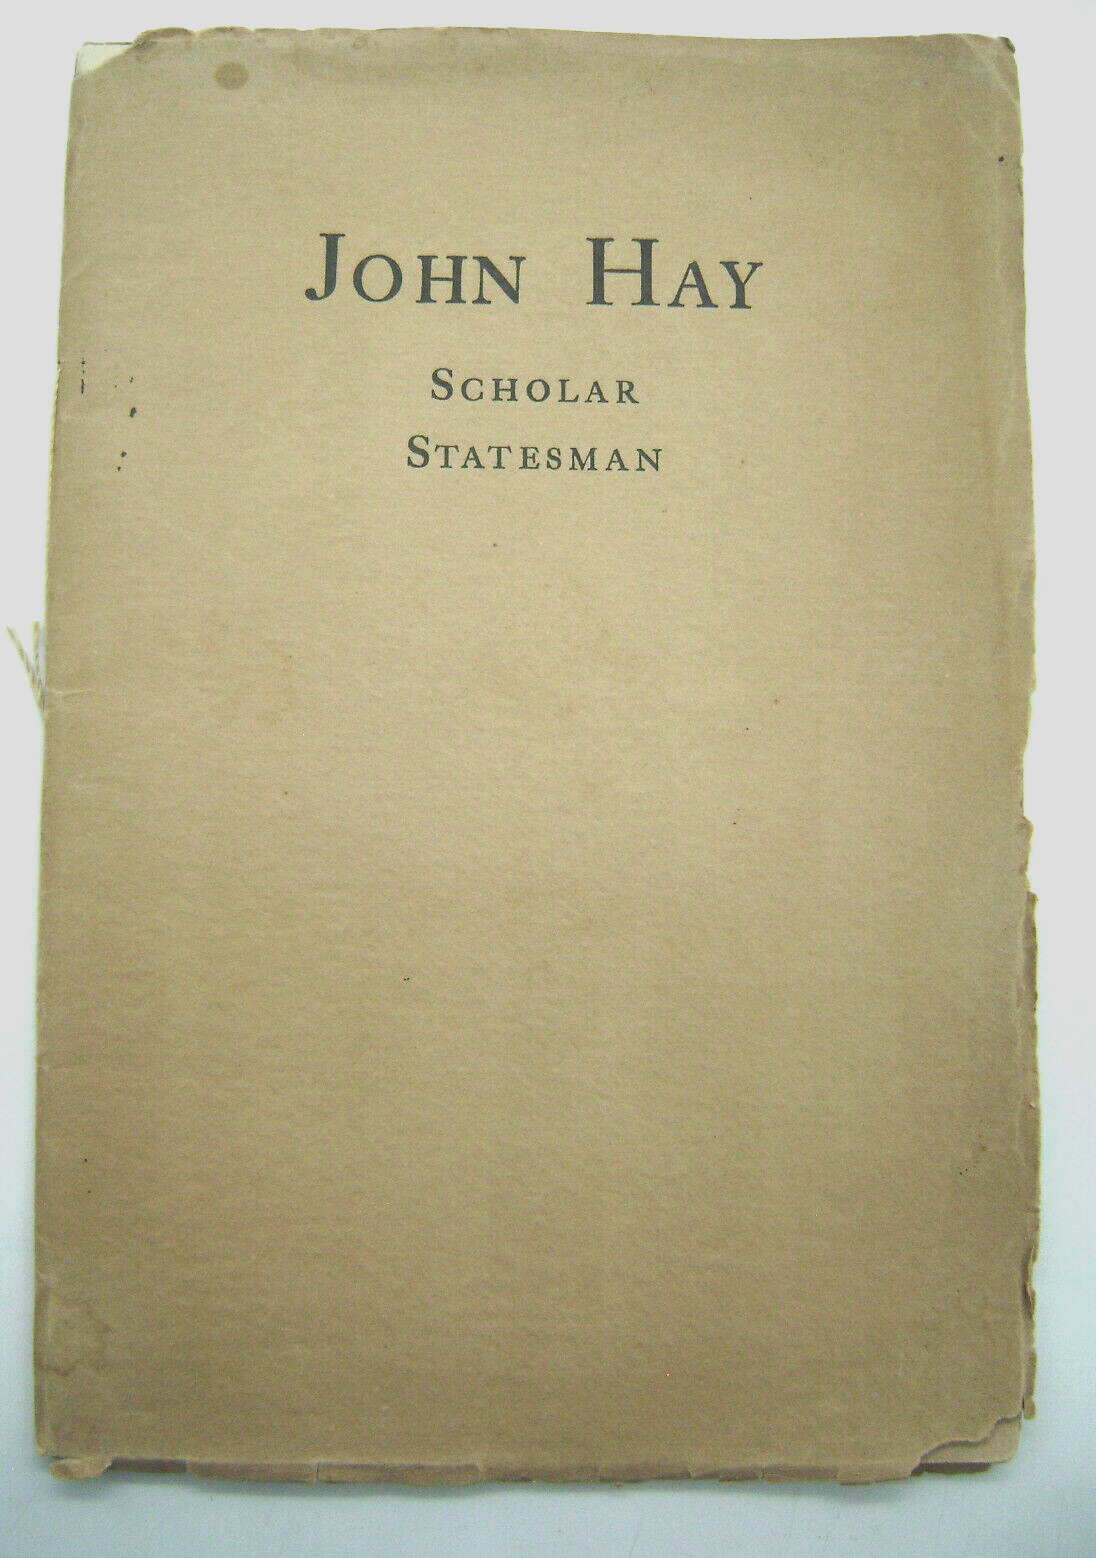 1906 John Hay Scholar Statesman Speech Transcript to Brown University by Bishop